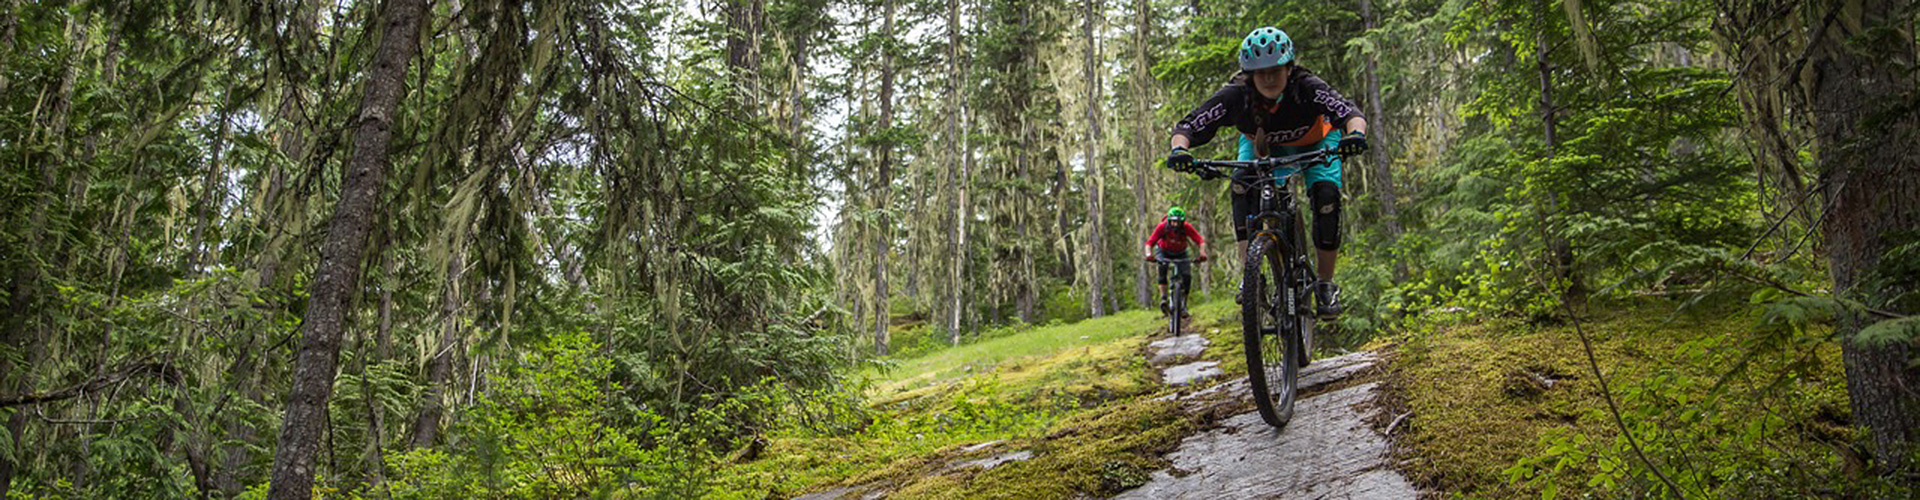 Two mountain bikers riding a steep rock slab